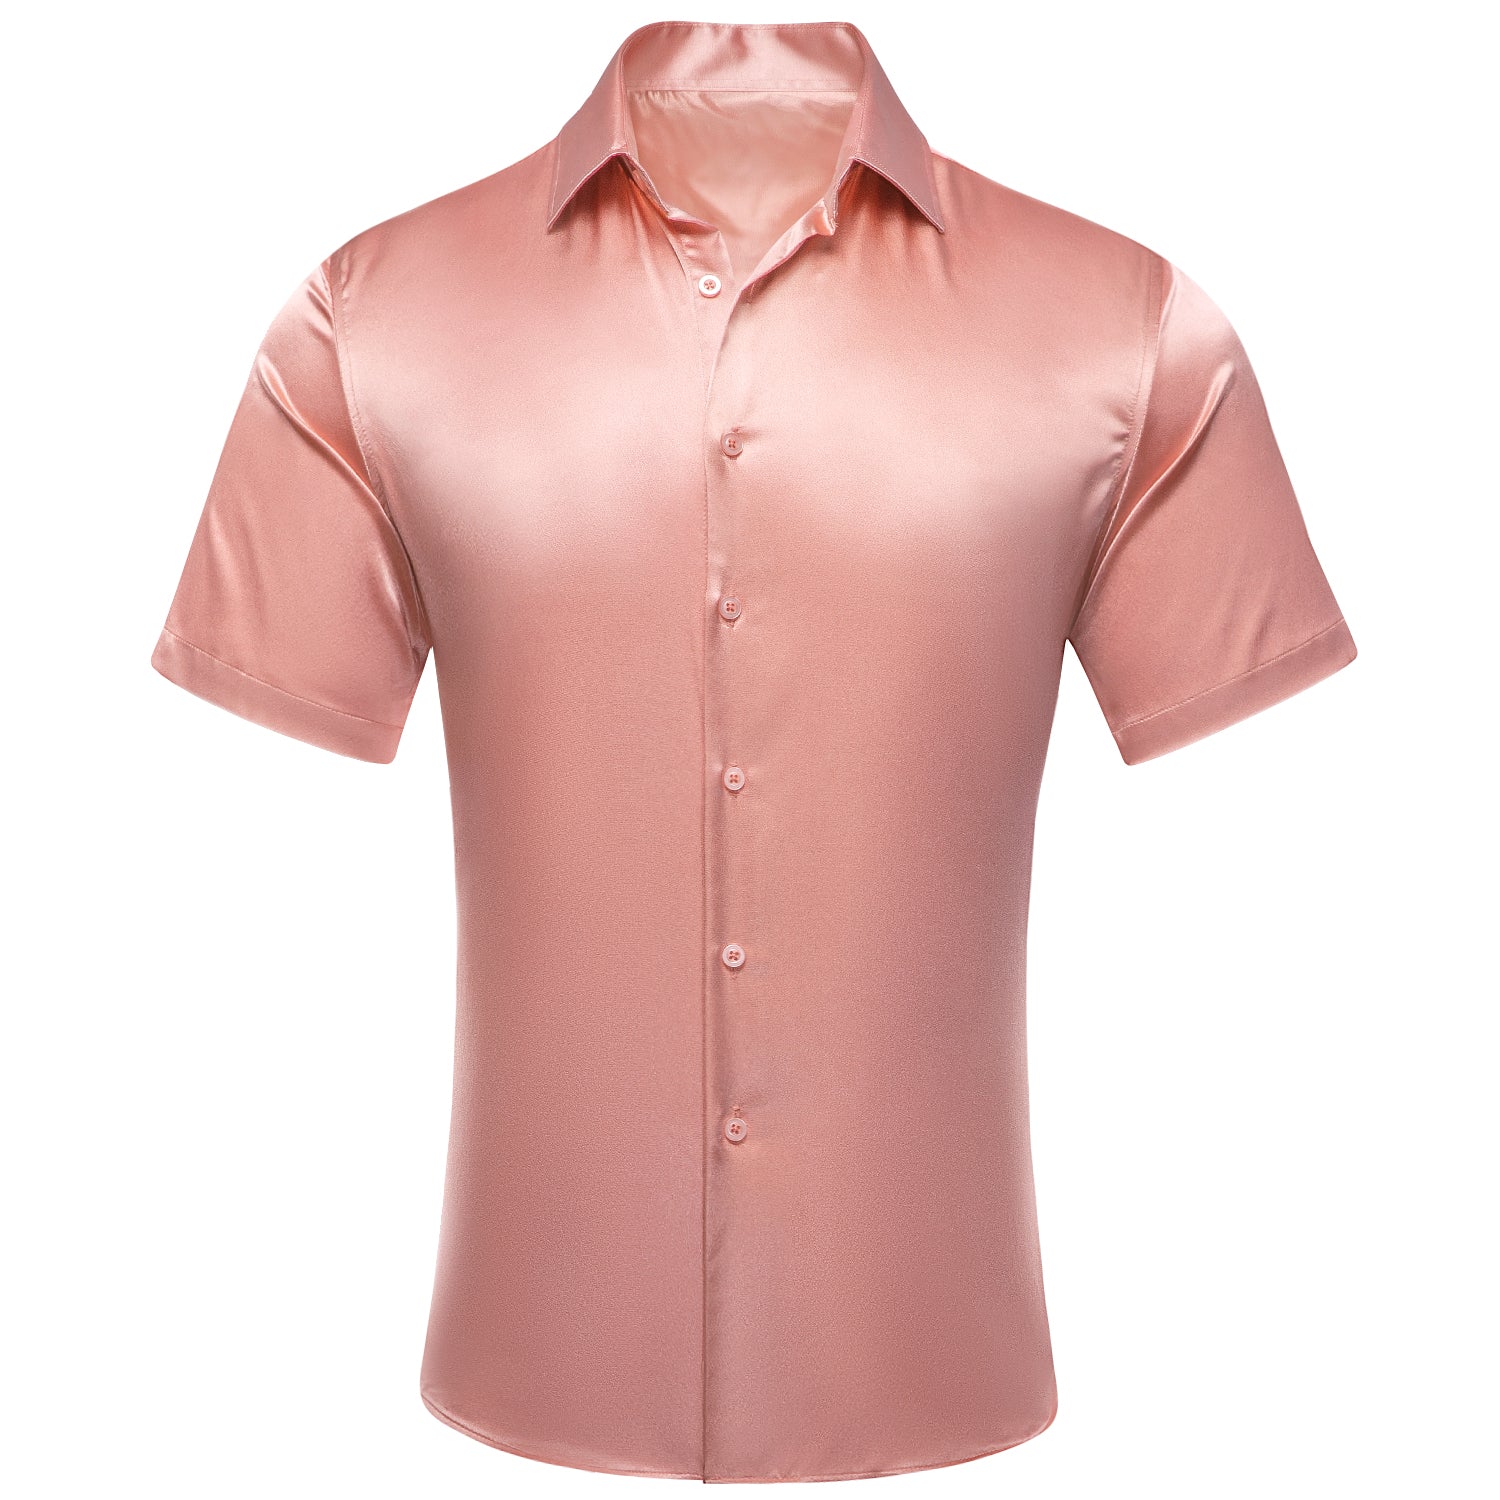 New Pink Solid Satin Men's Short Sleeve Shirt